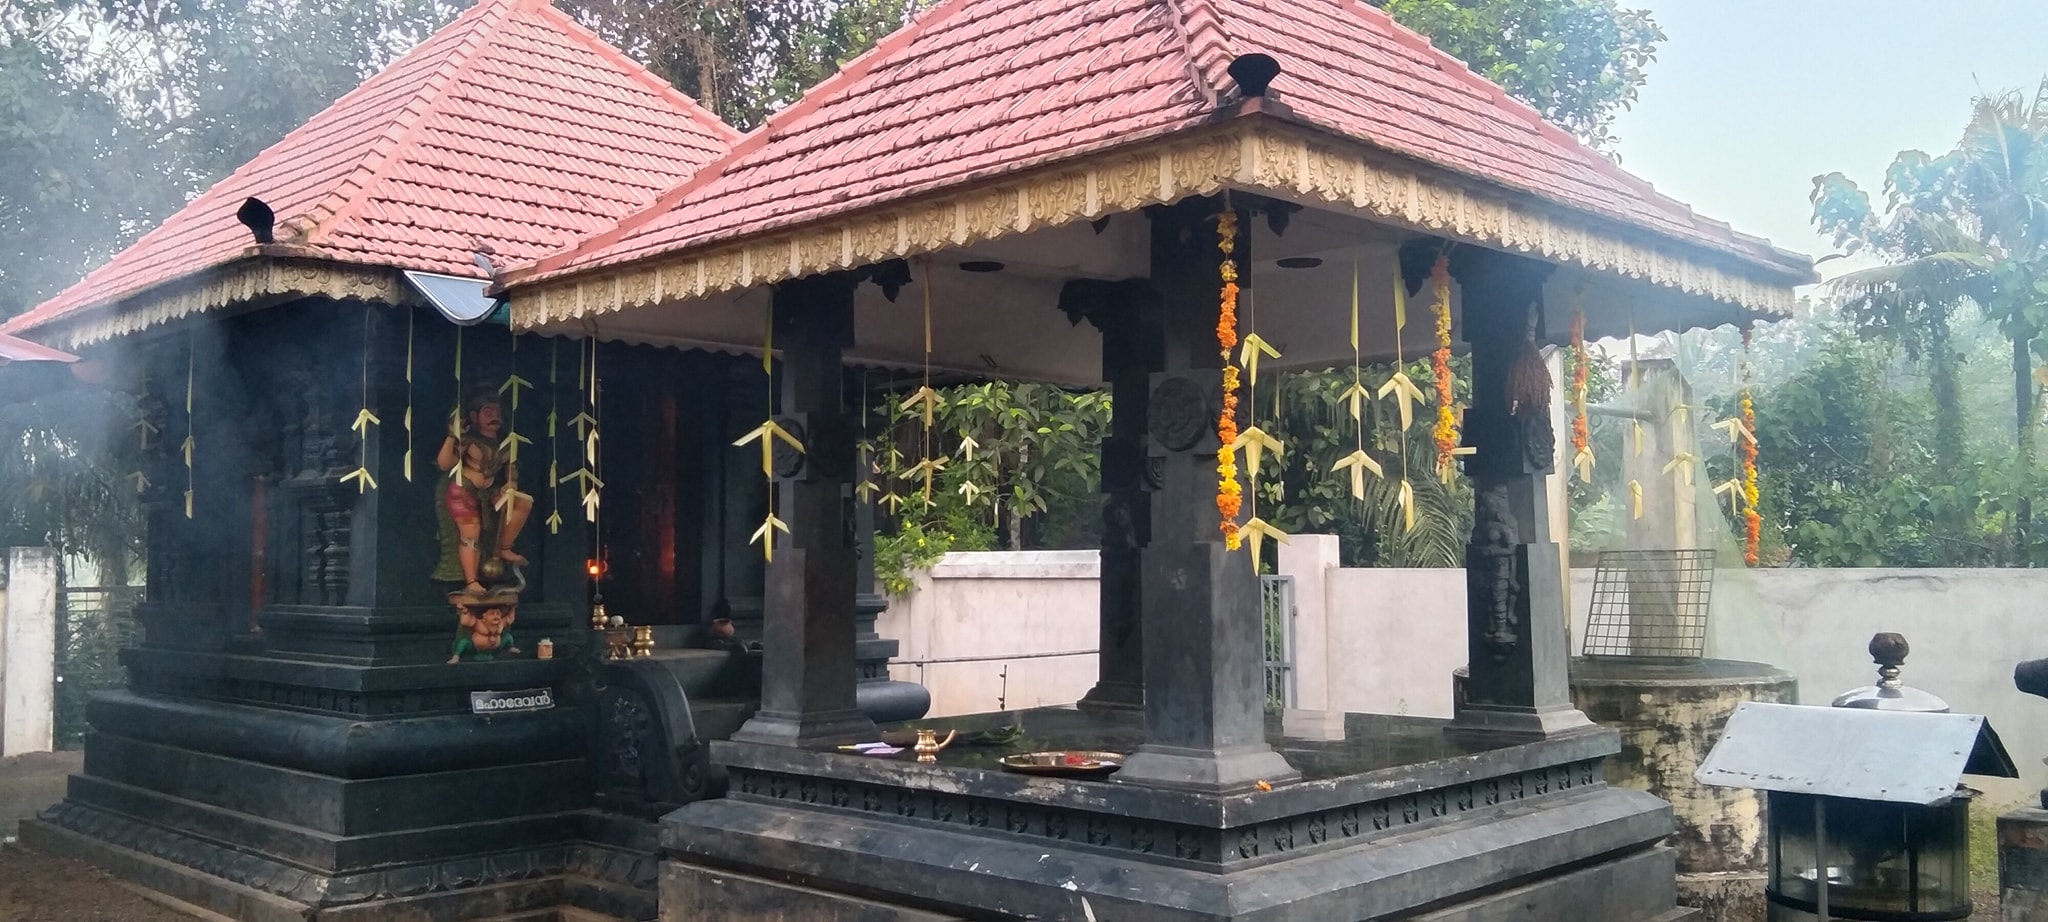 Ponvelikkavu Sree Bhagavathi is an Shakthi devi in Hinduism